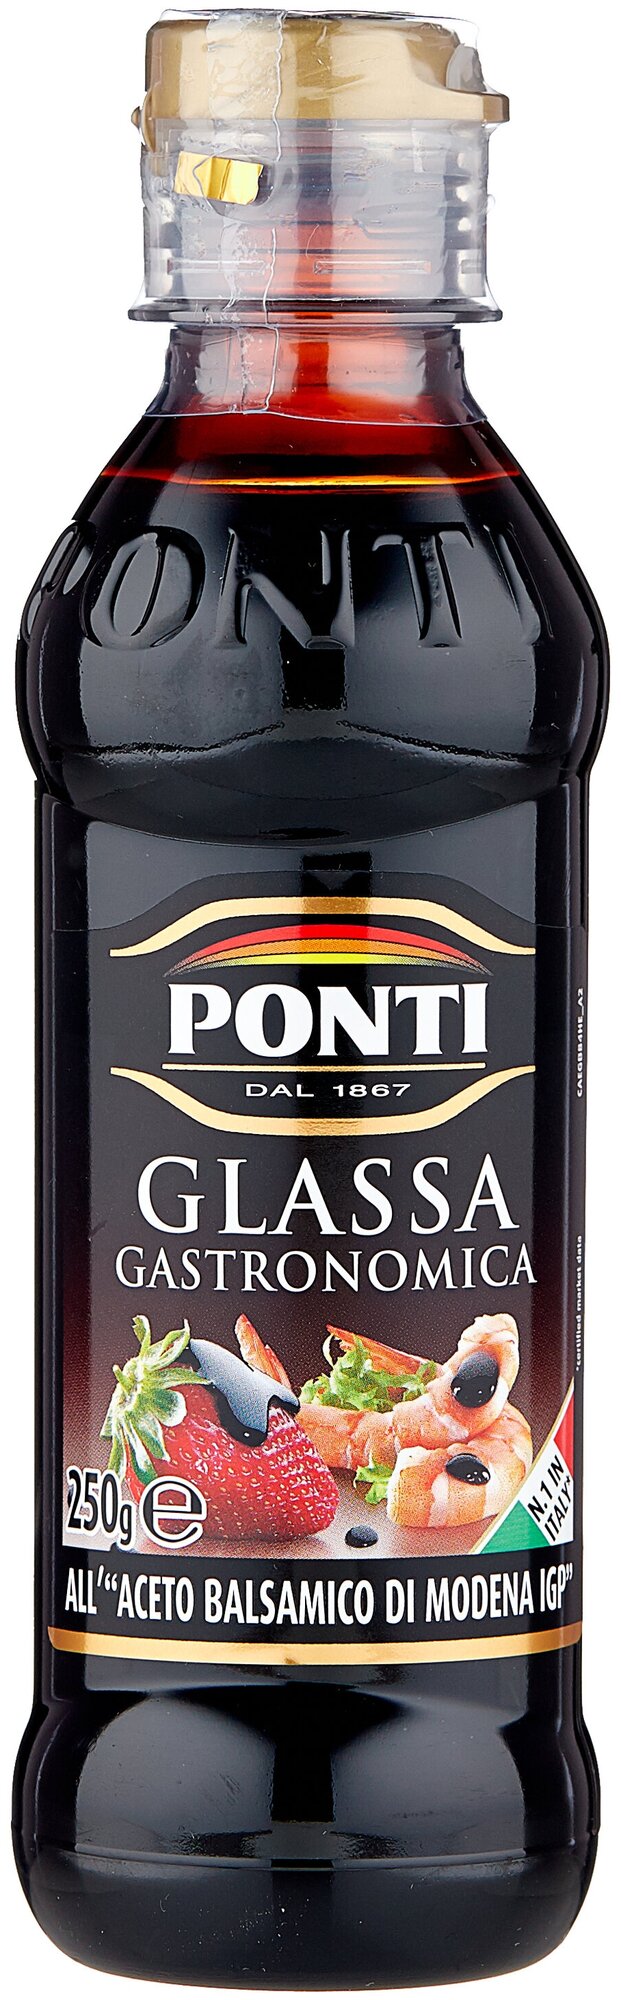 Соус Ponti Glassa gastronomica